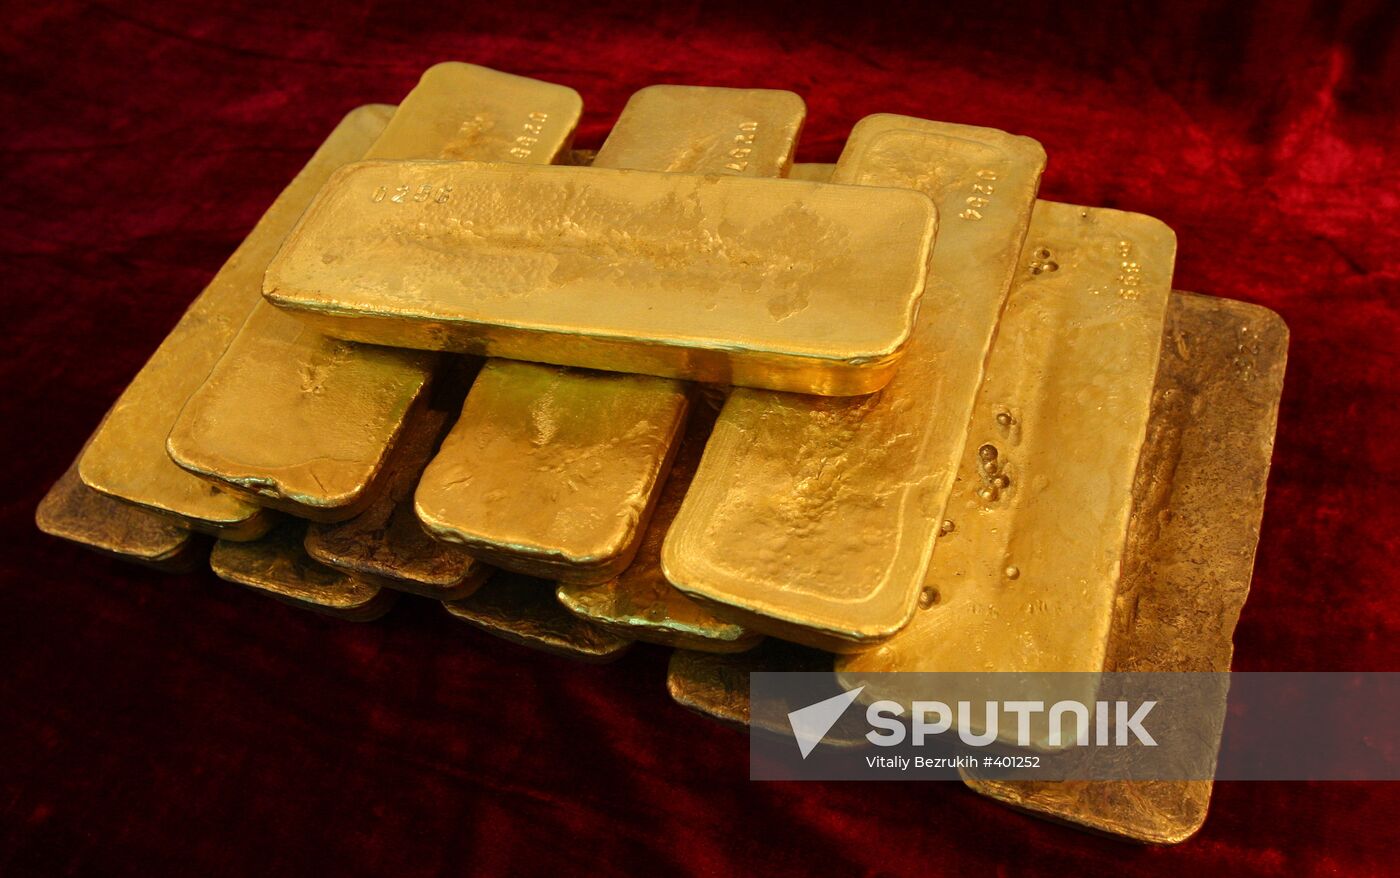 Gold mining company Polyus Gold